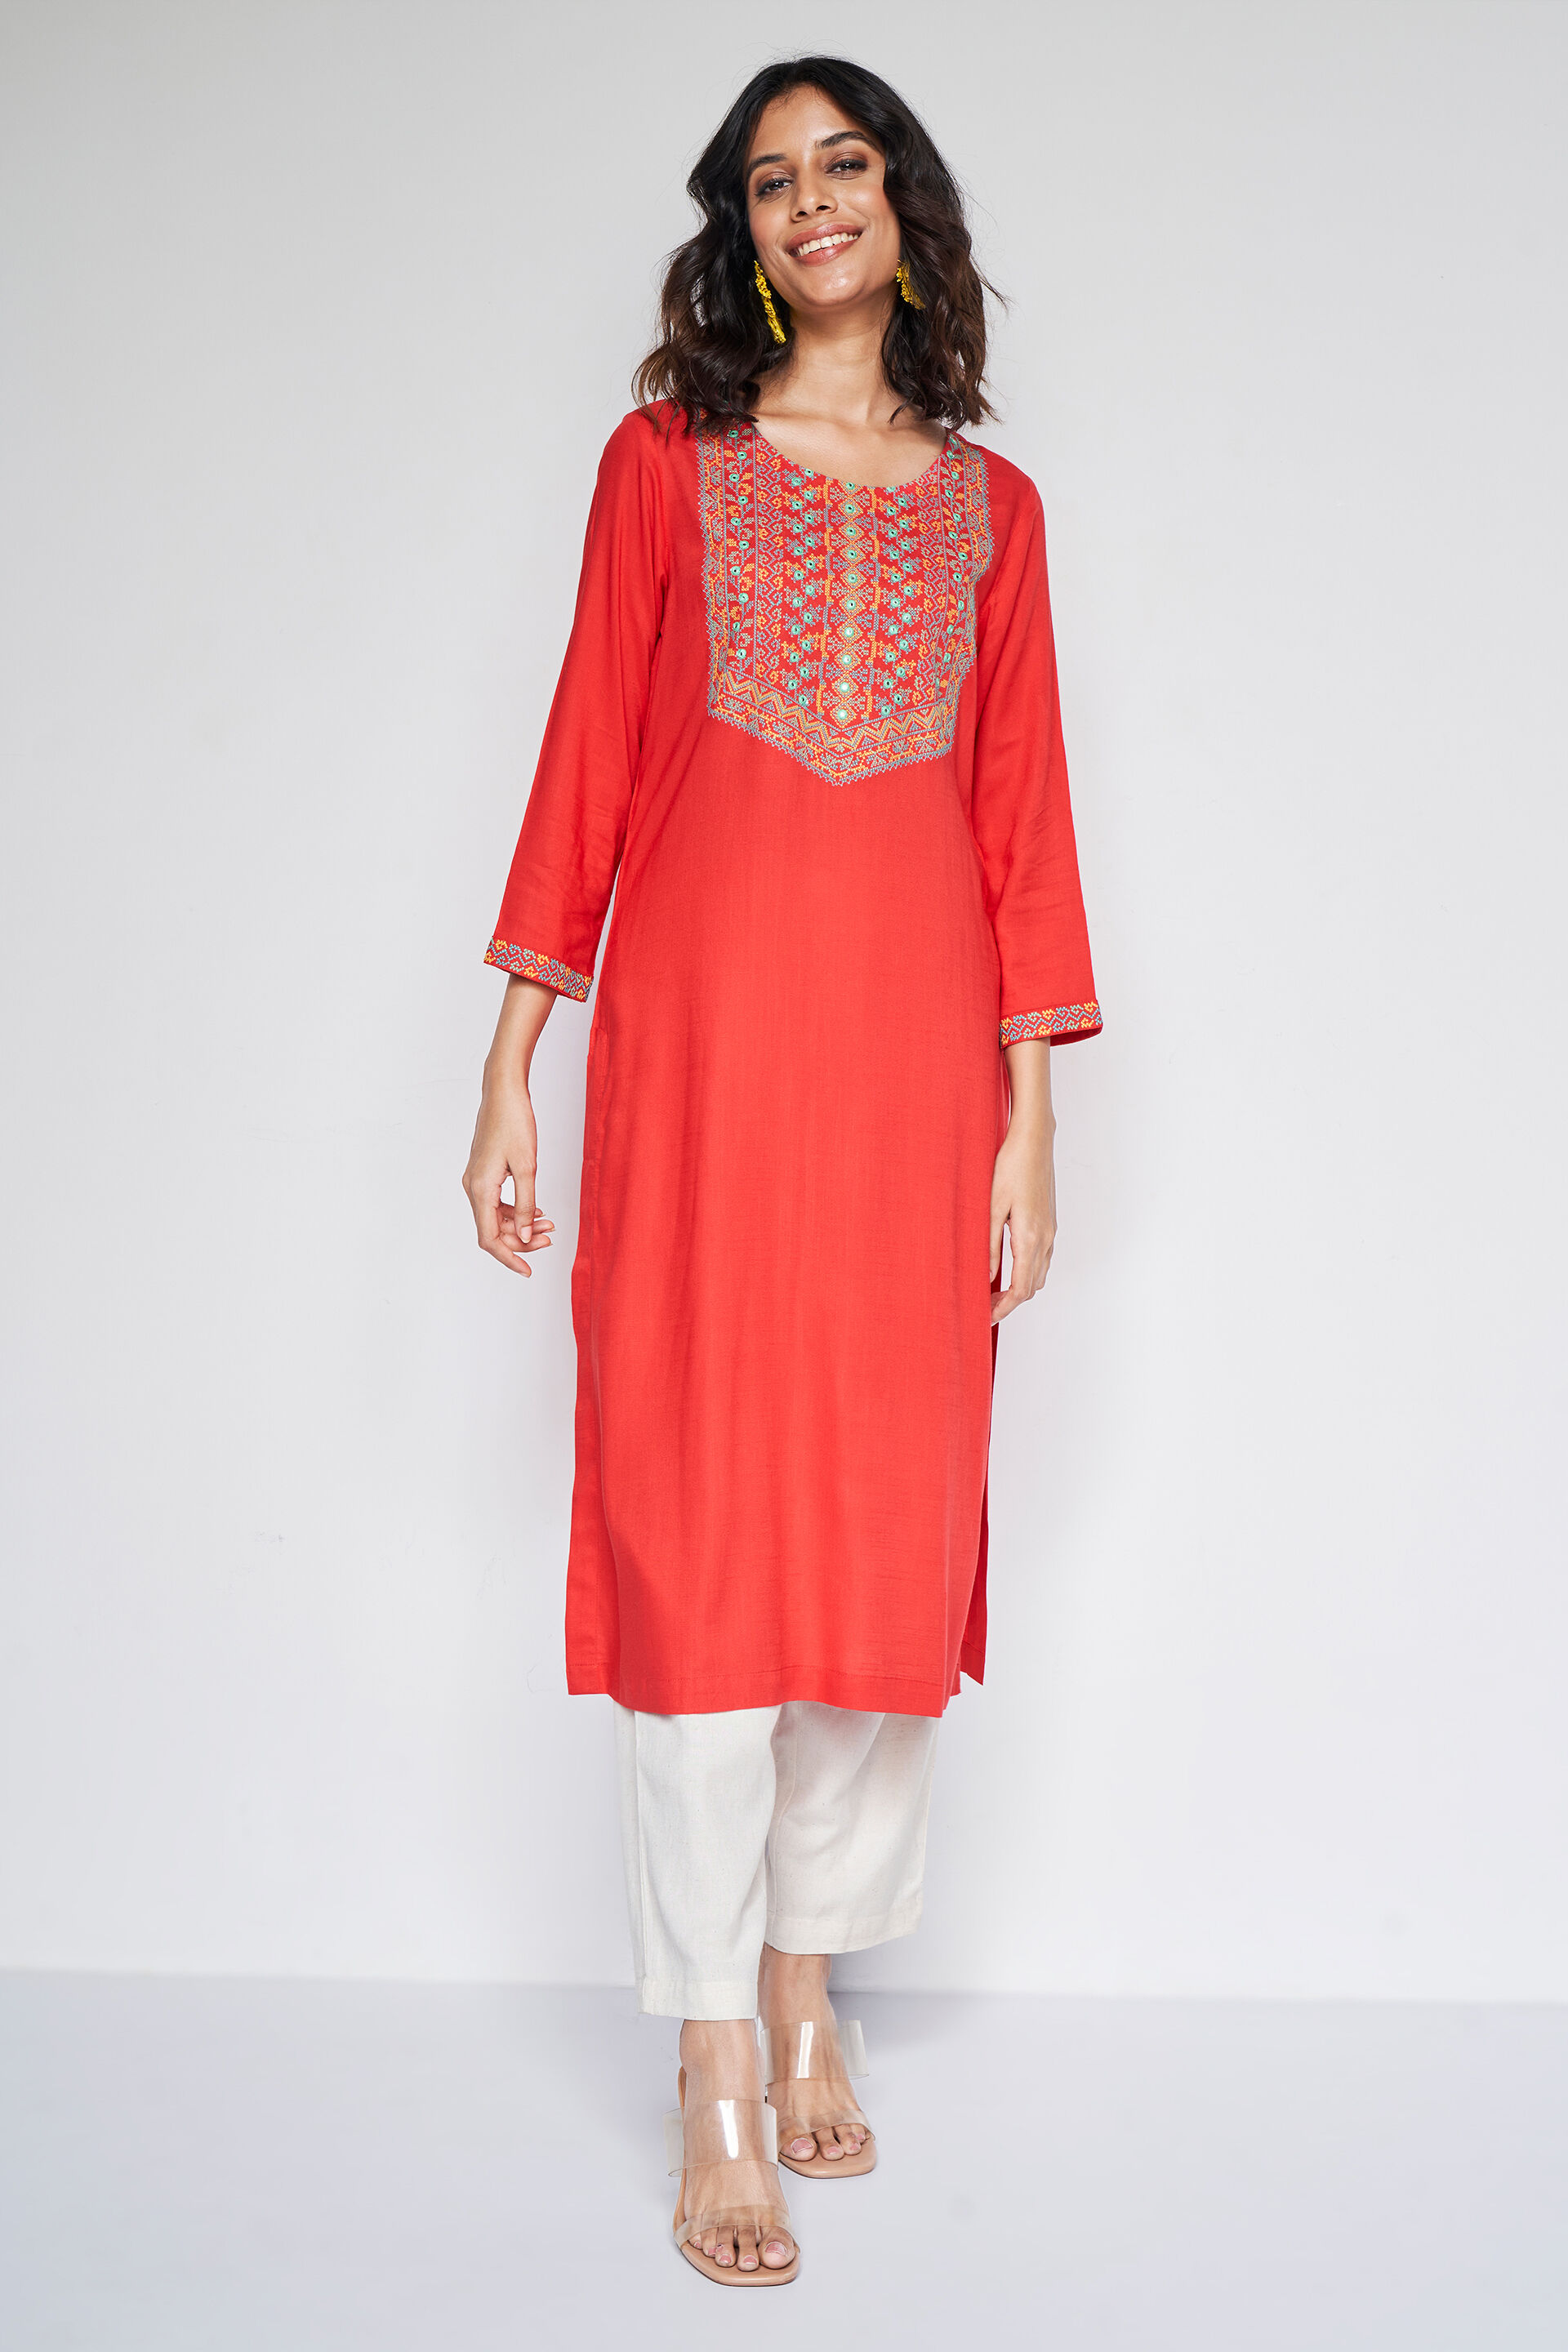 Buy Global Desi Women's Cotton Bold Red Kurti with KasutKurti Embroidery -  S at Amazon.in